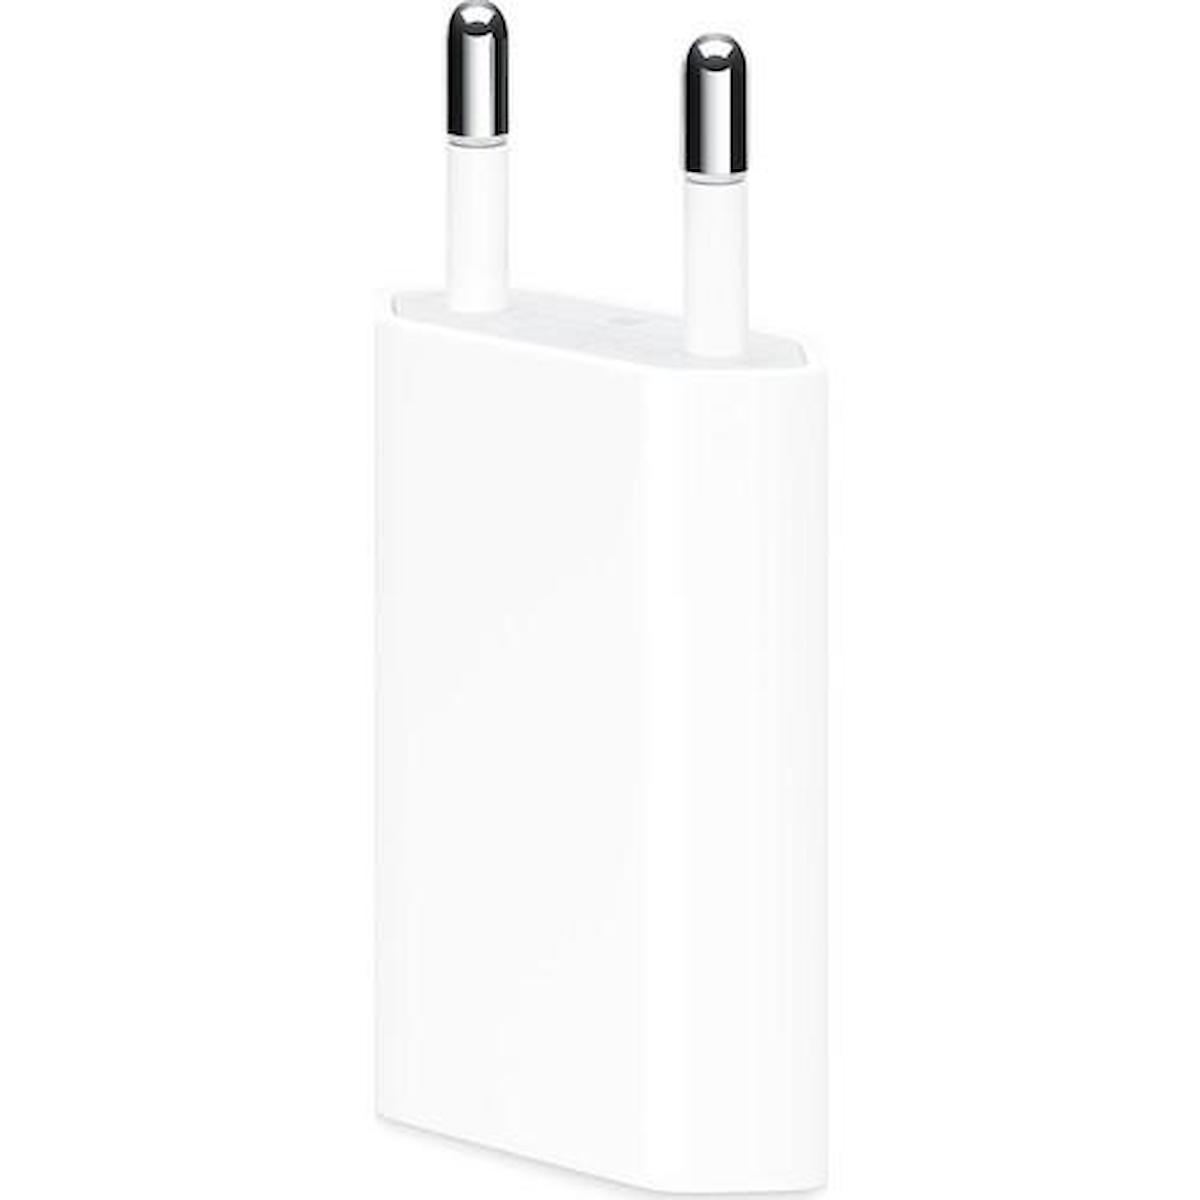 Apple Md813zm/a iPhone USB Kablolu 5 W 1 Amper Şarj Aleti Beyaz